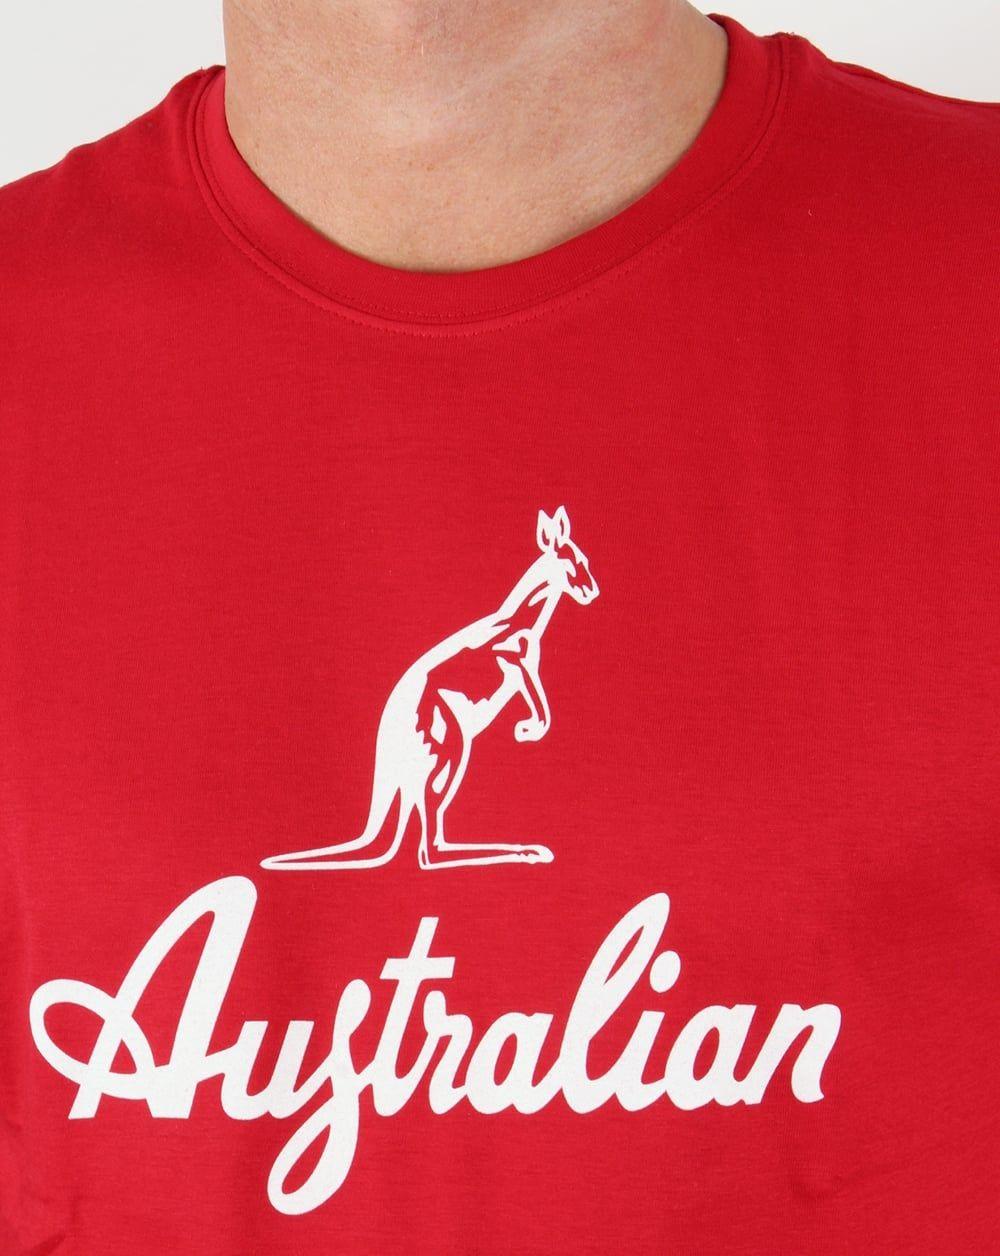 Red and White Kangaroo Logo - australian logo carrier tee